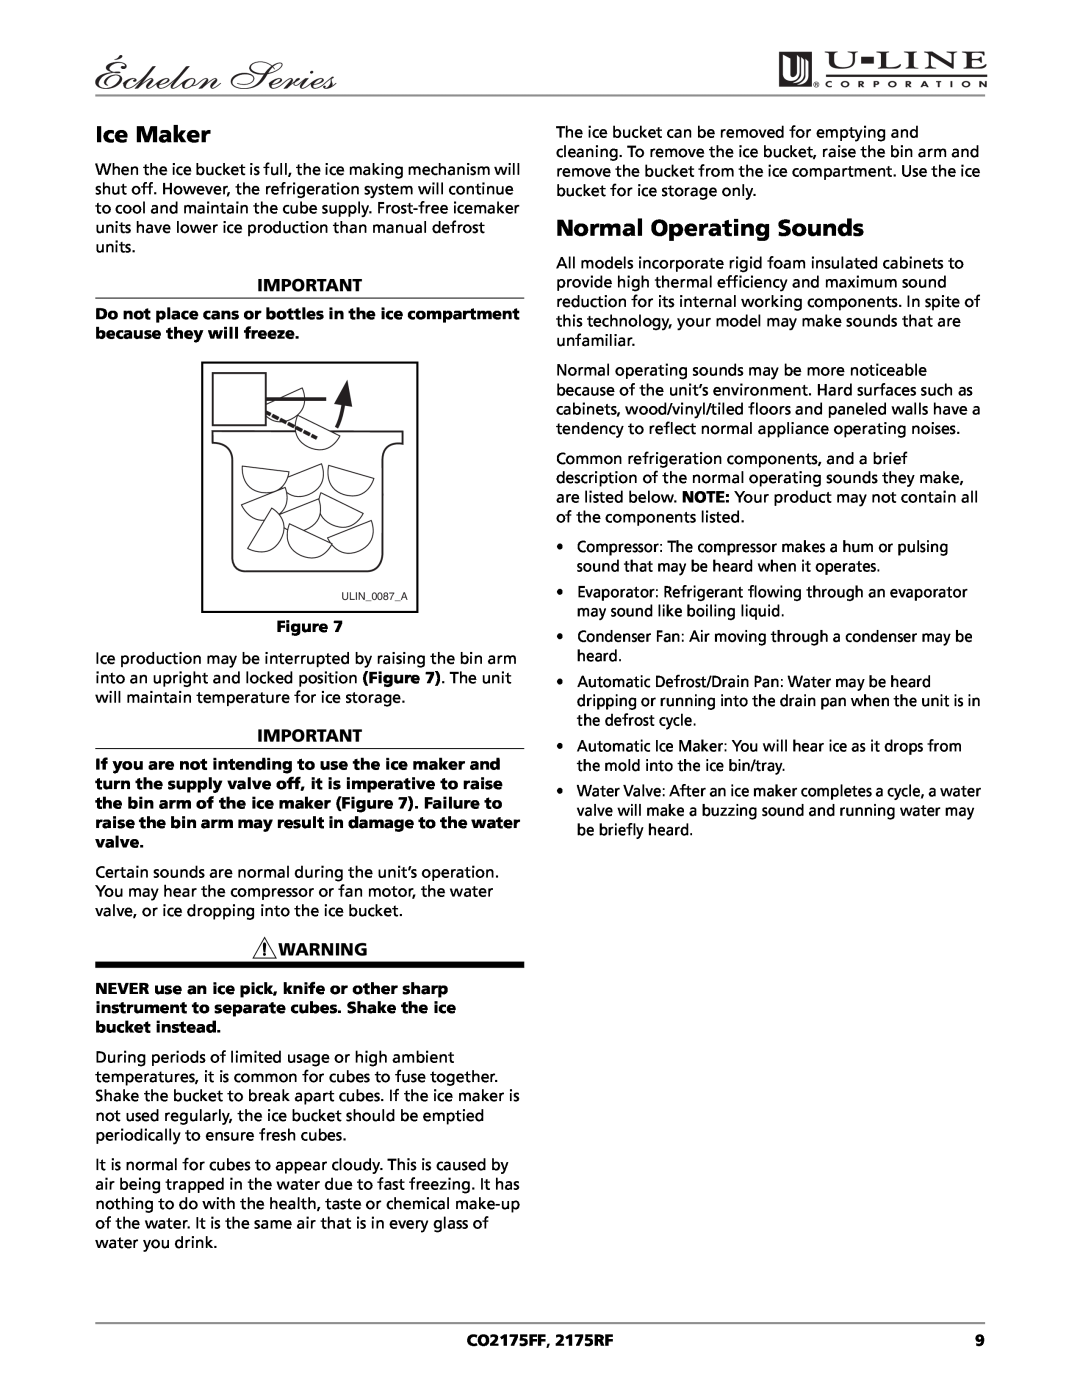 U-Line CO2175FF 2175RF manual Ice Maker, Normal Operating Sounds, CO2175FF, 2175RF 